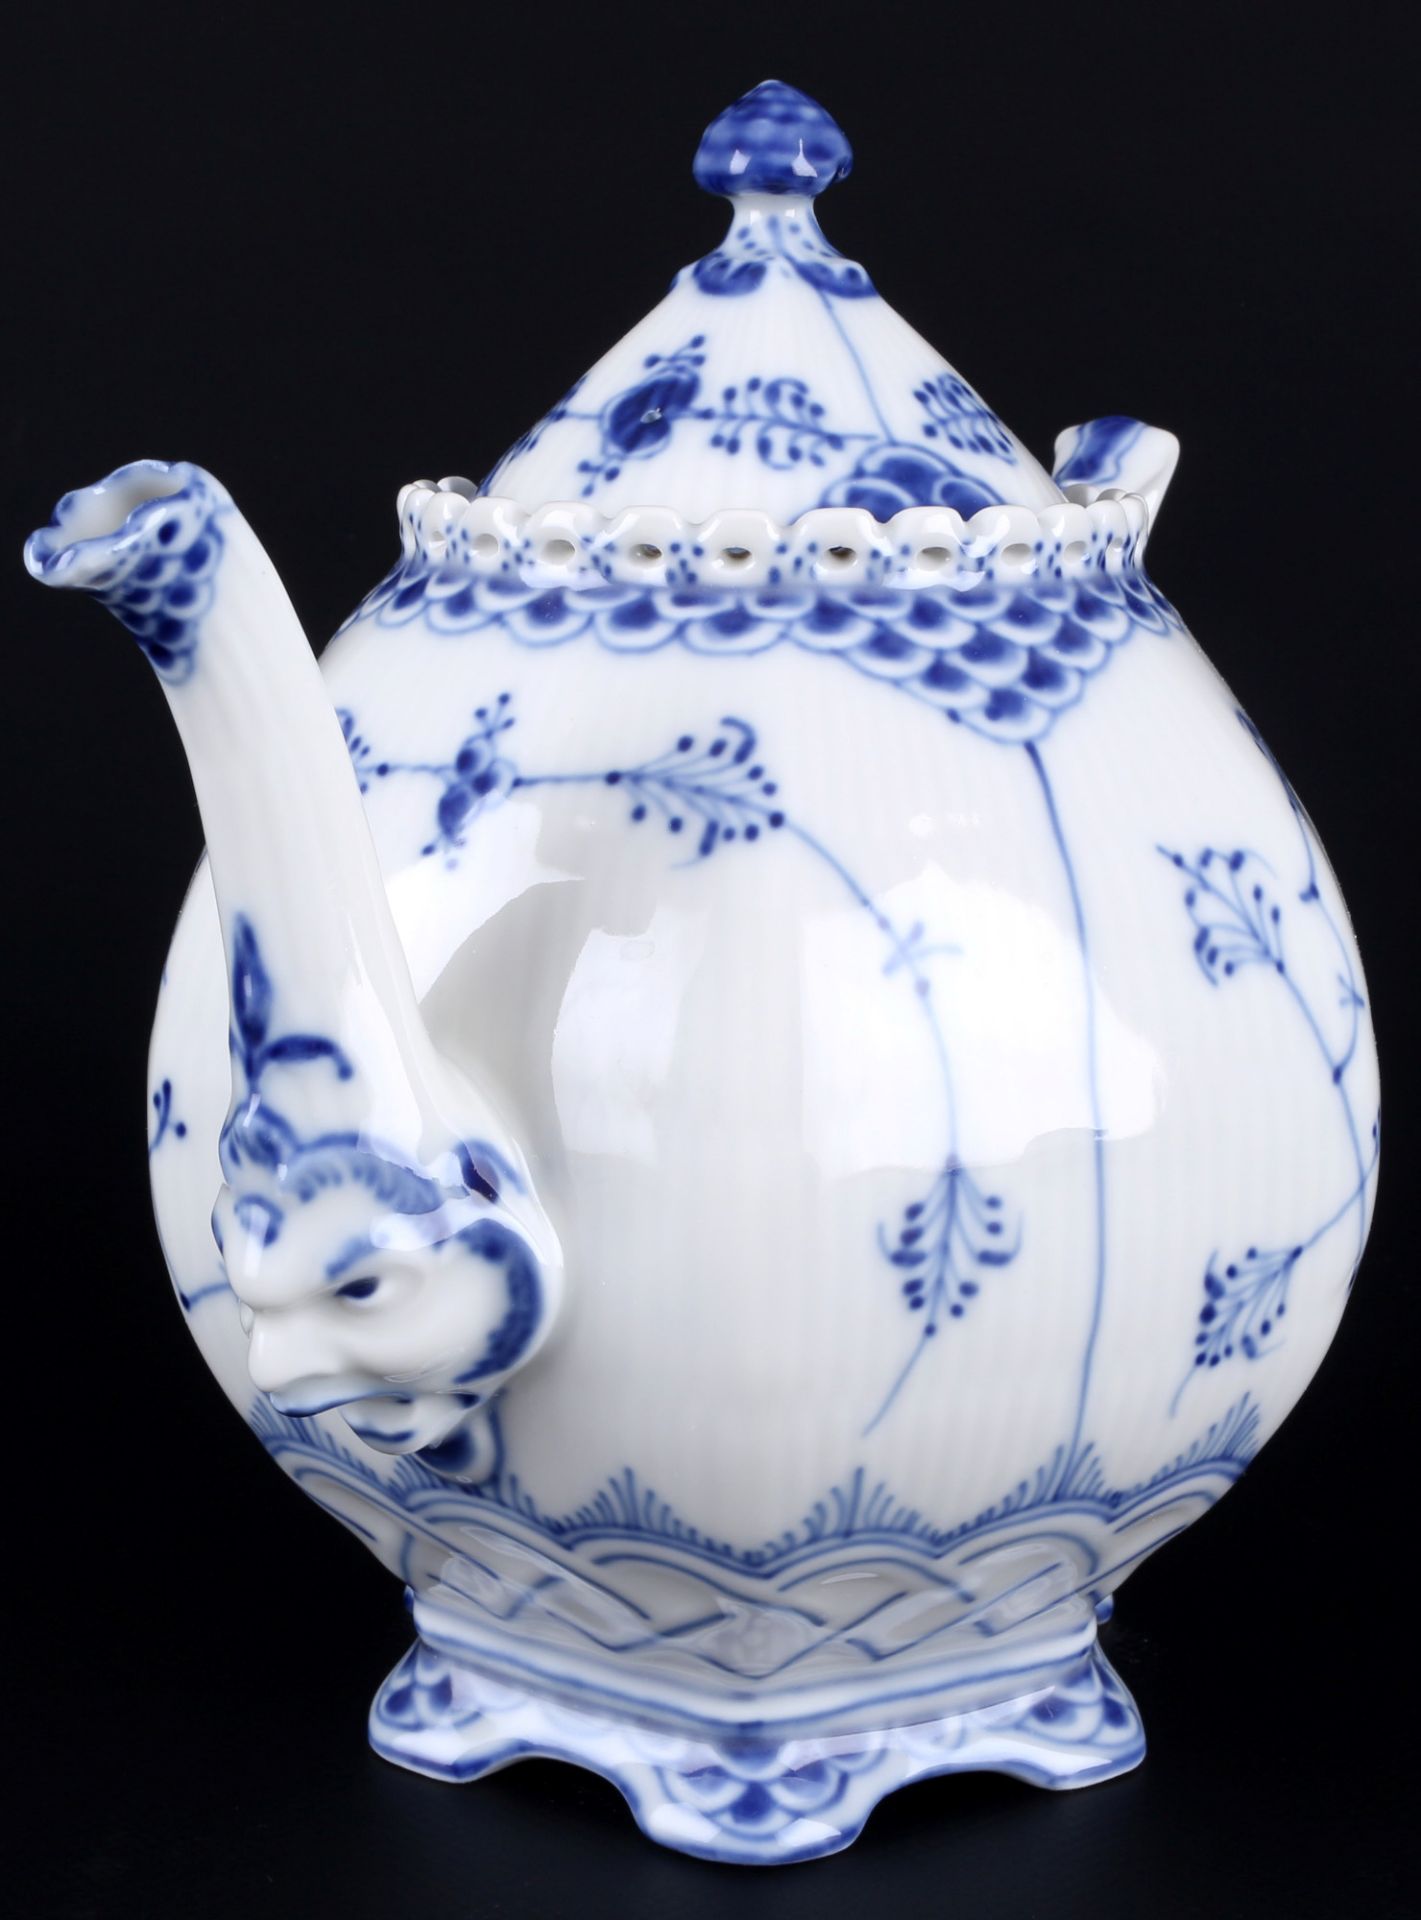 Royal Copenhagen Musselmalet Full Lace tea pot 1119 1st choice, Vollspitze Teekanne, - Image 2 of 4